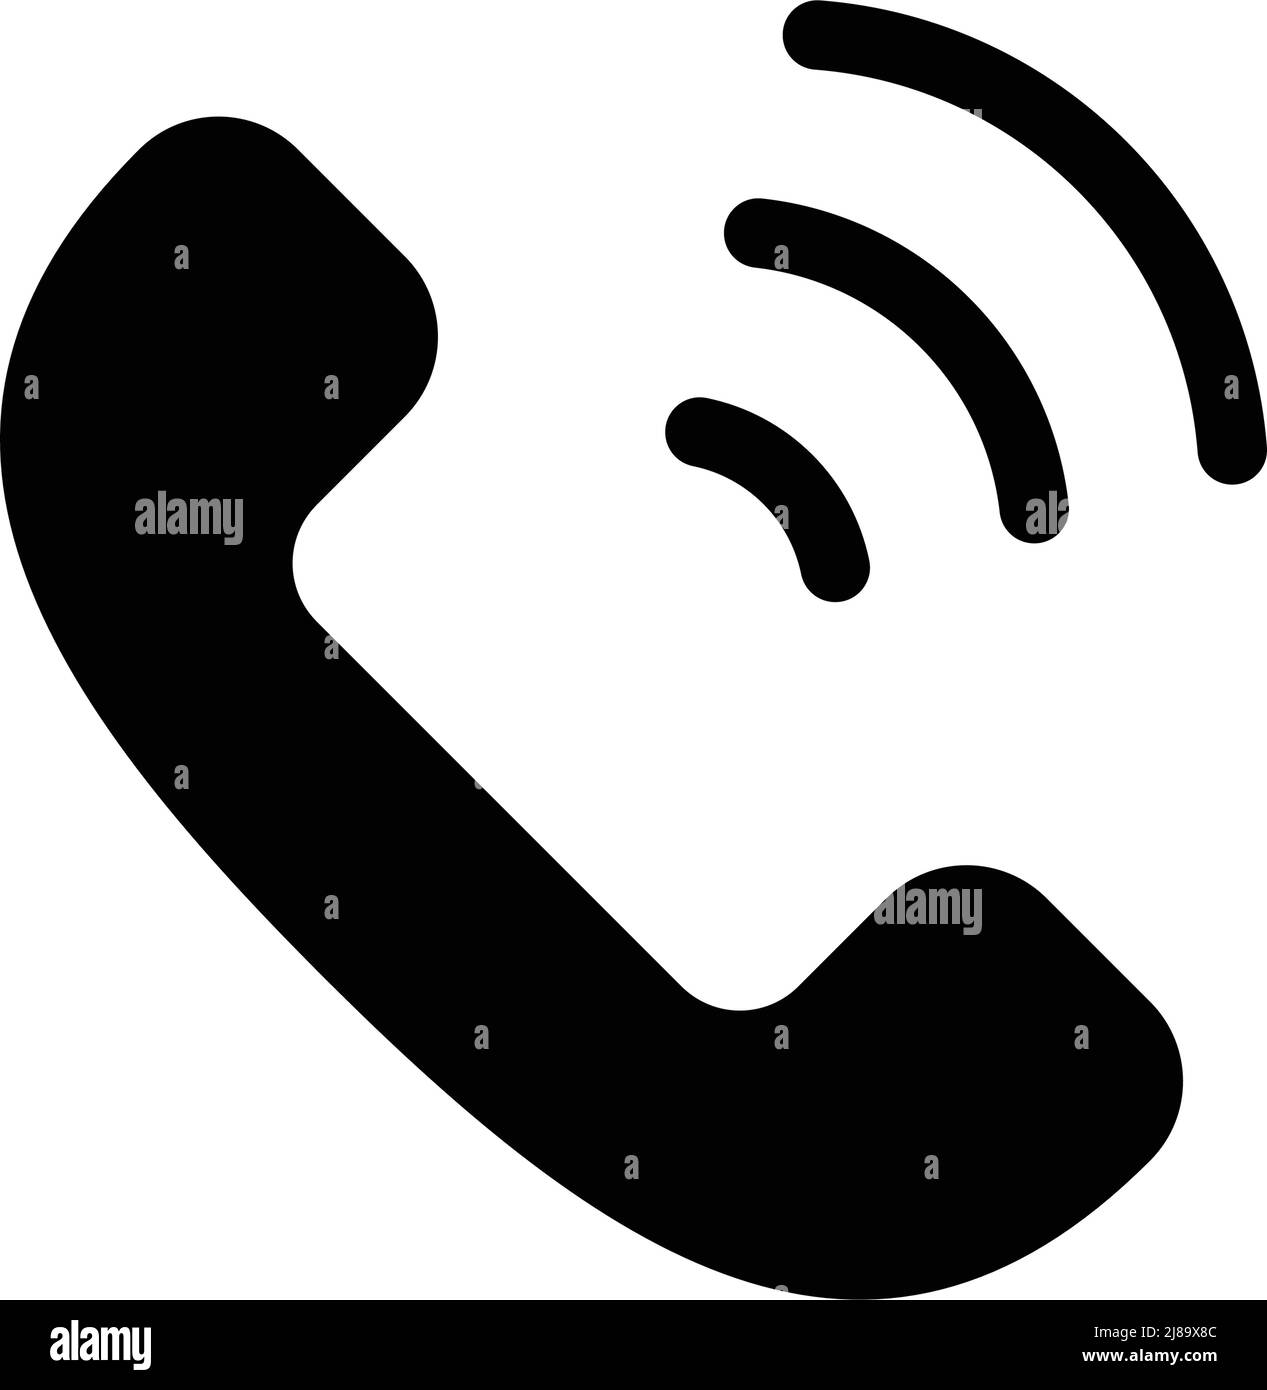 Silhouette icon of a phone on a call. Editable vector. Stock Vector